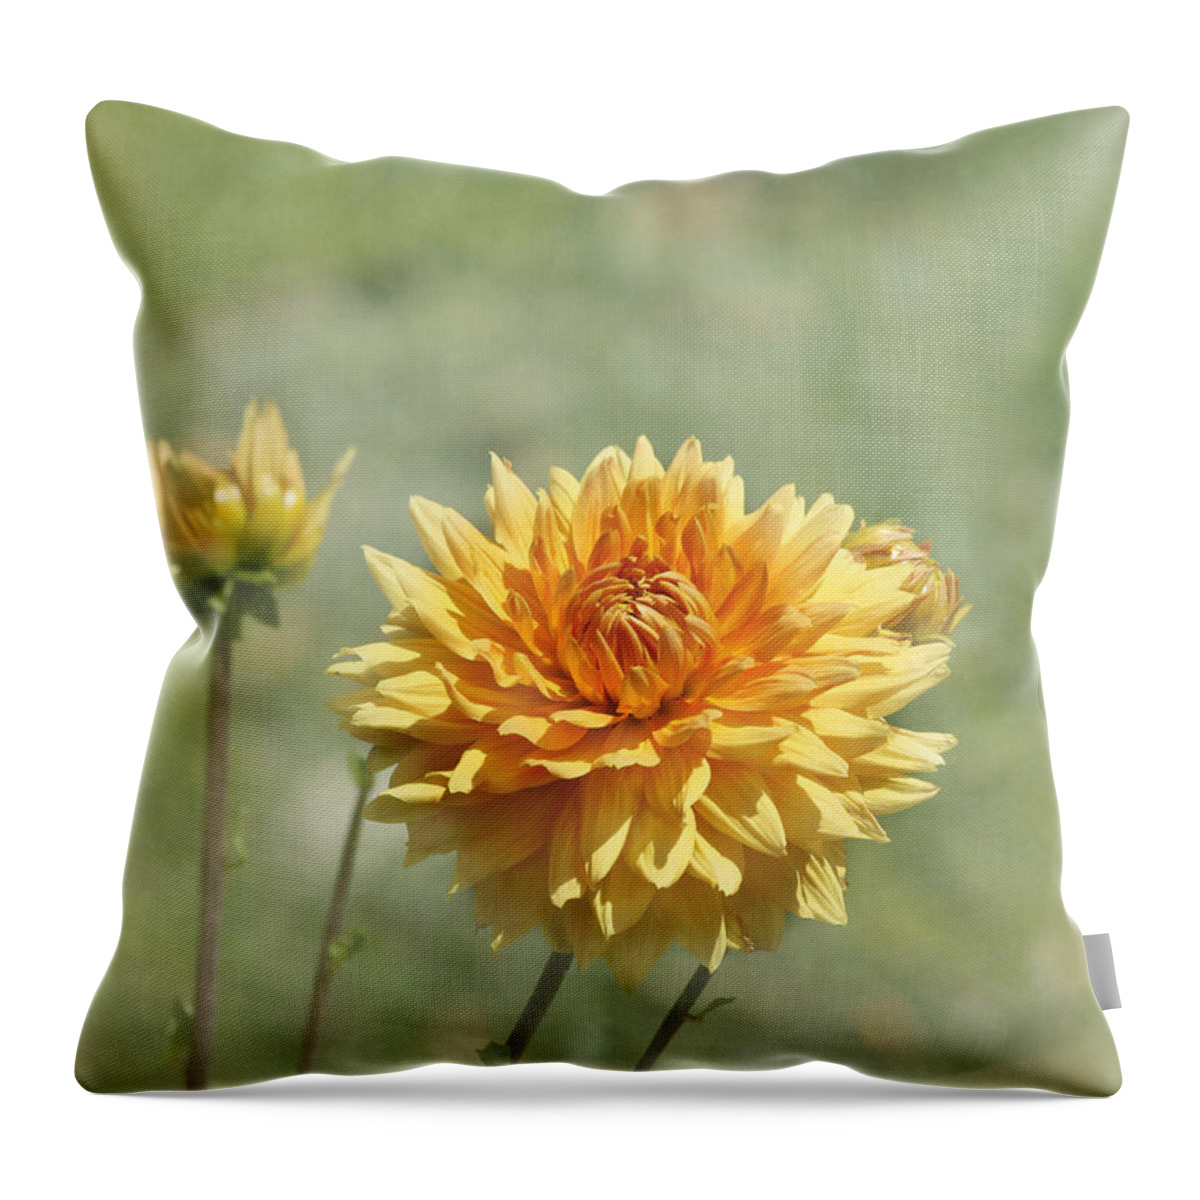 Orange Dahlia Throw Pillow featuring the photograph Dahlia Flowers by Kim Hojnacki